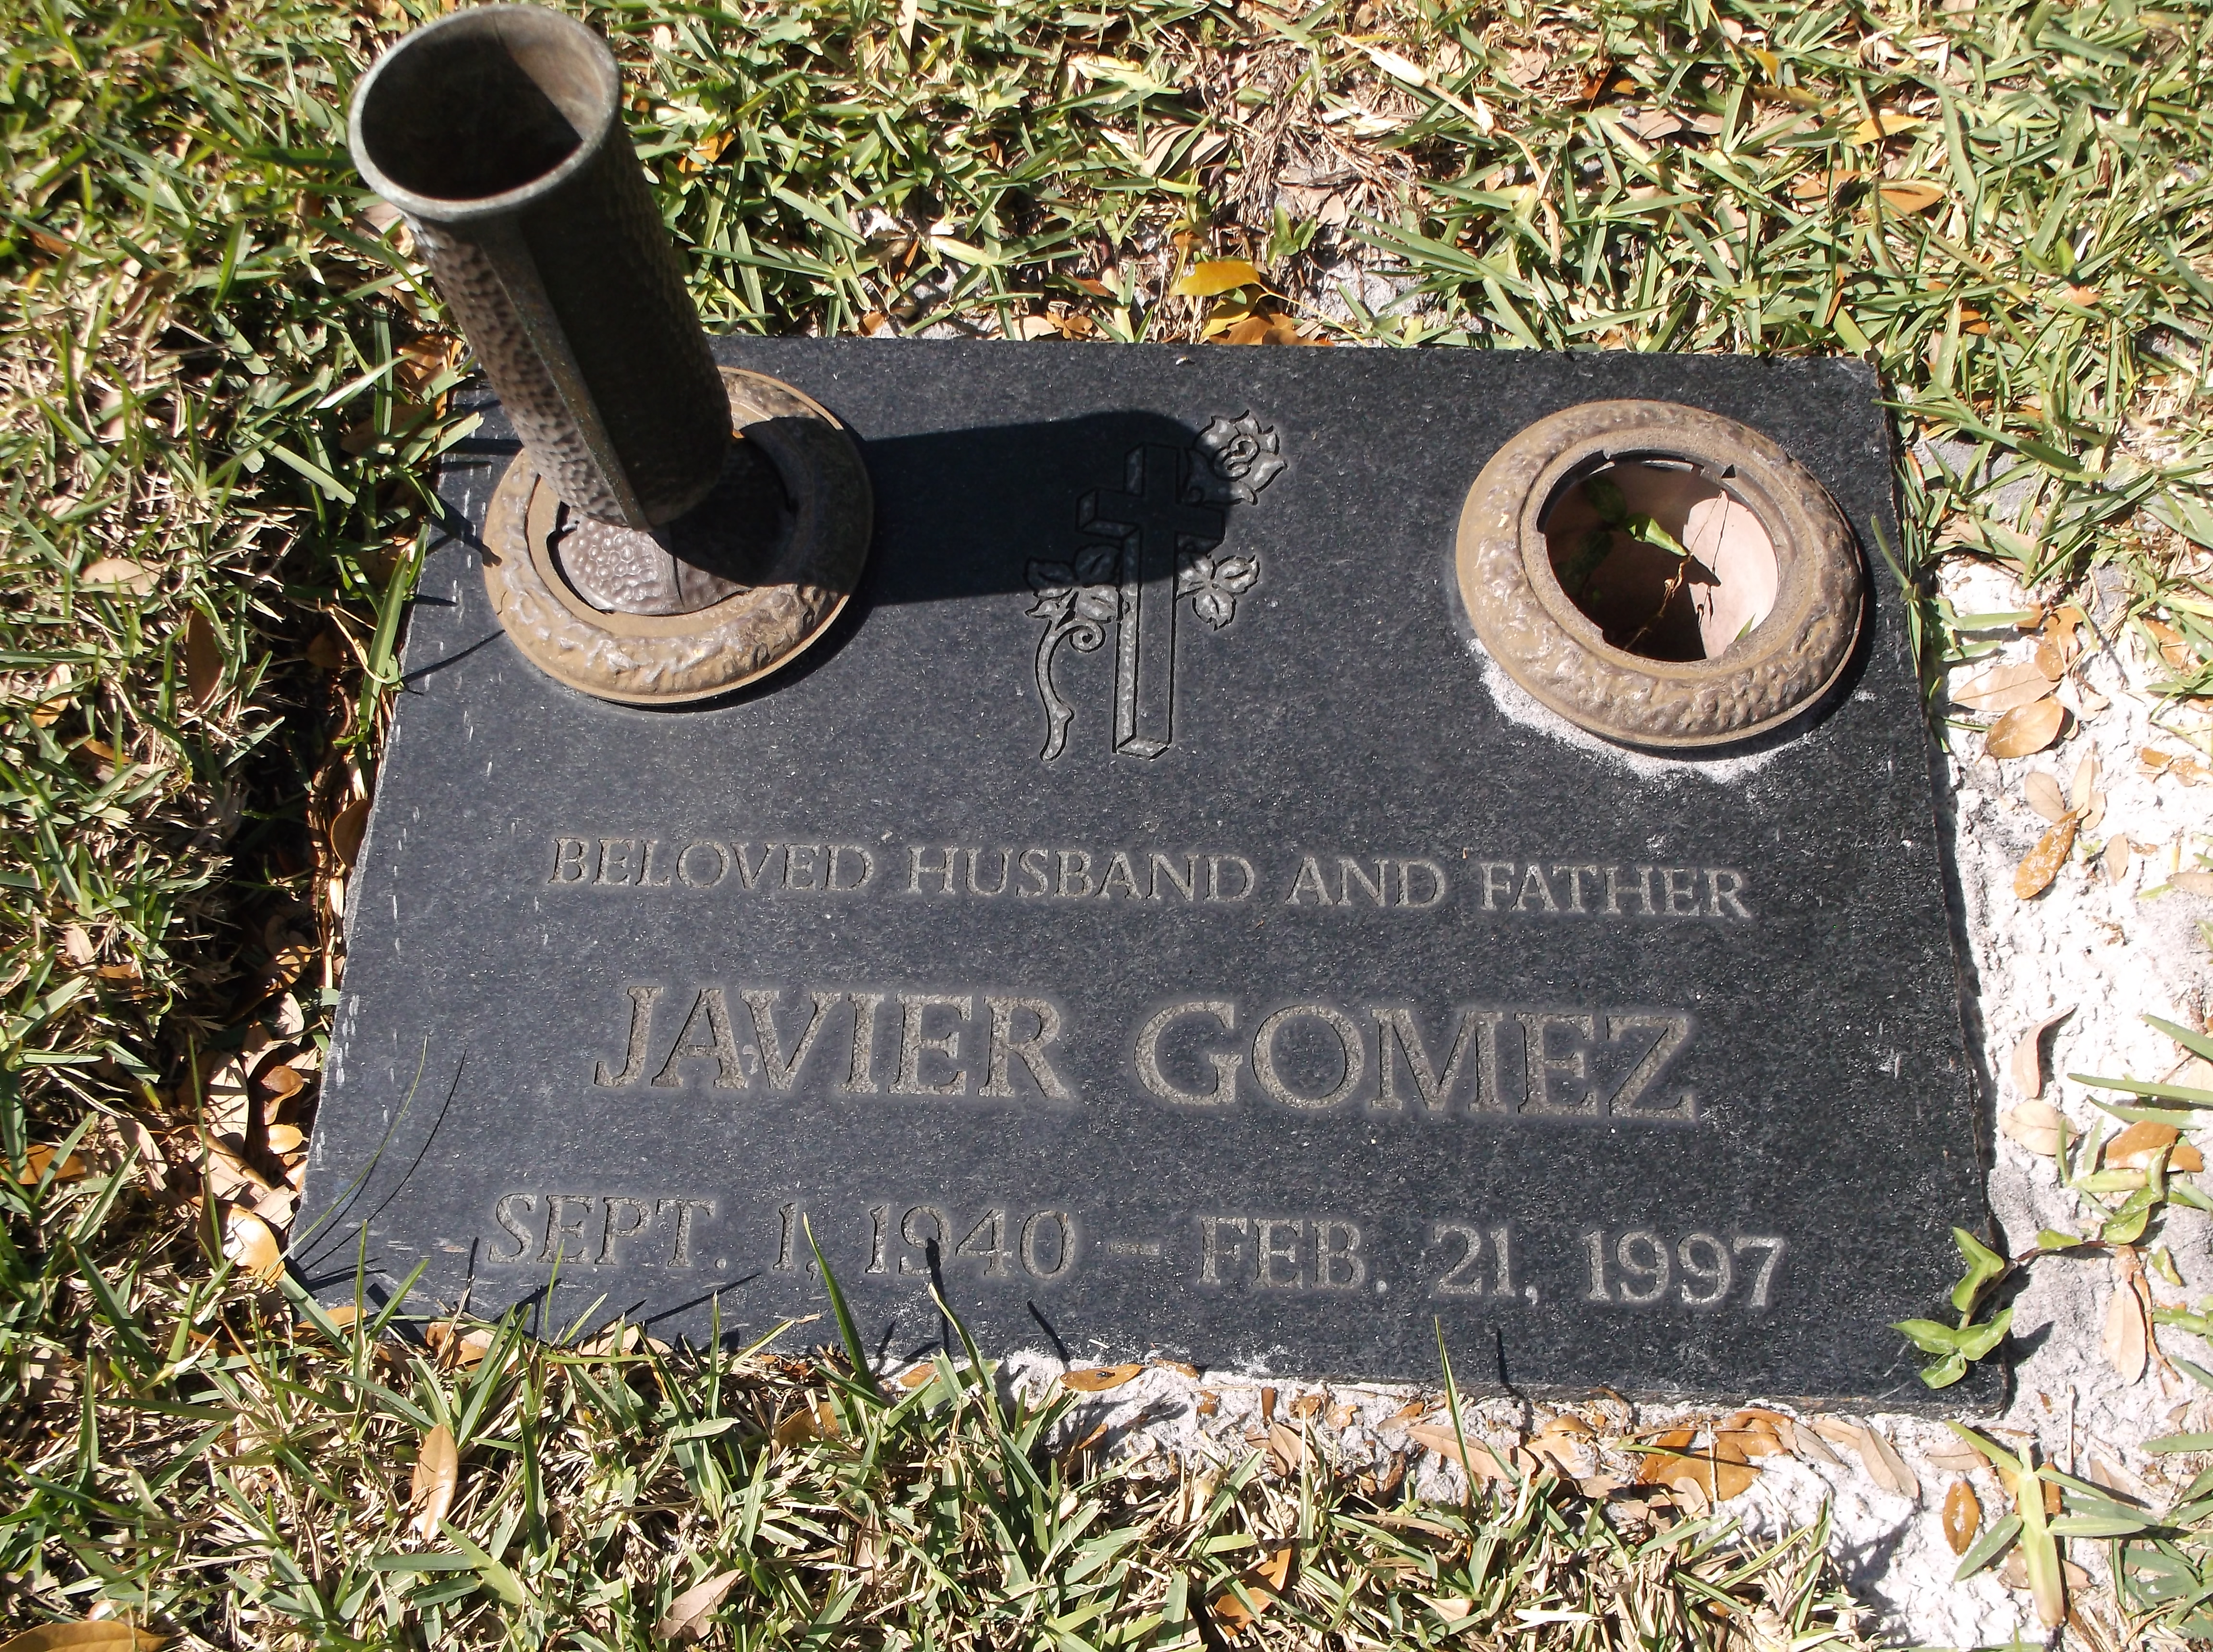 Javier Gomez